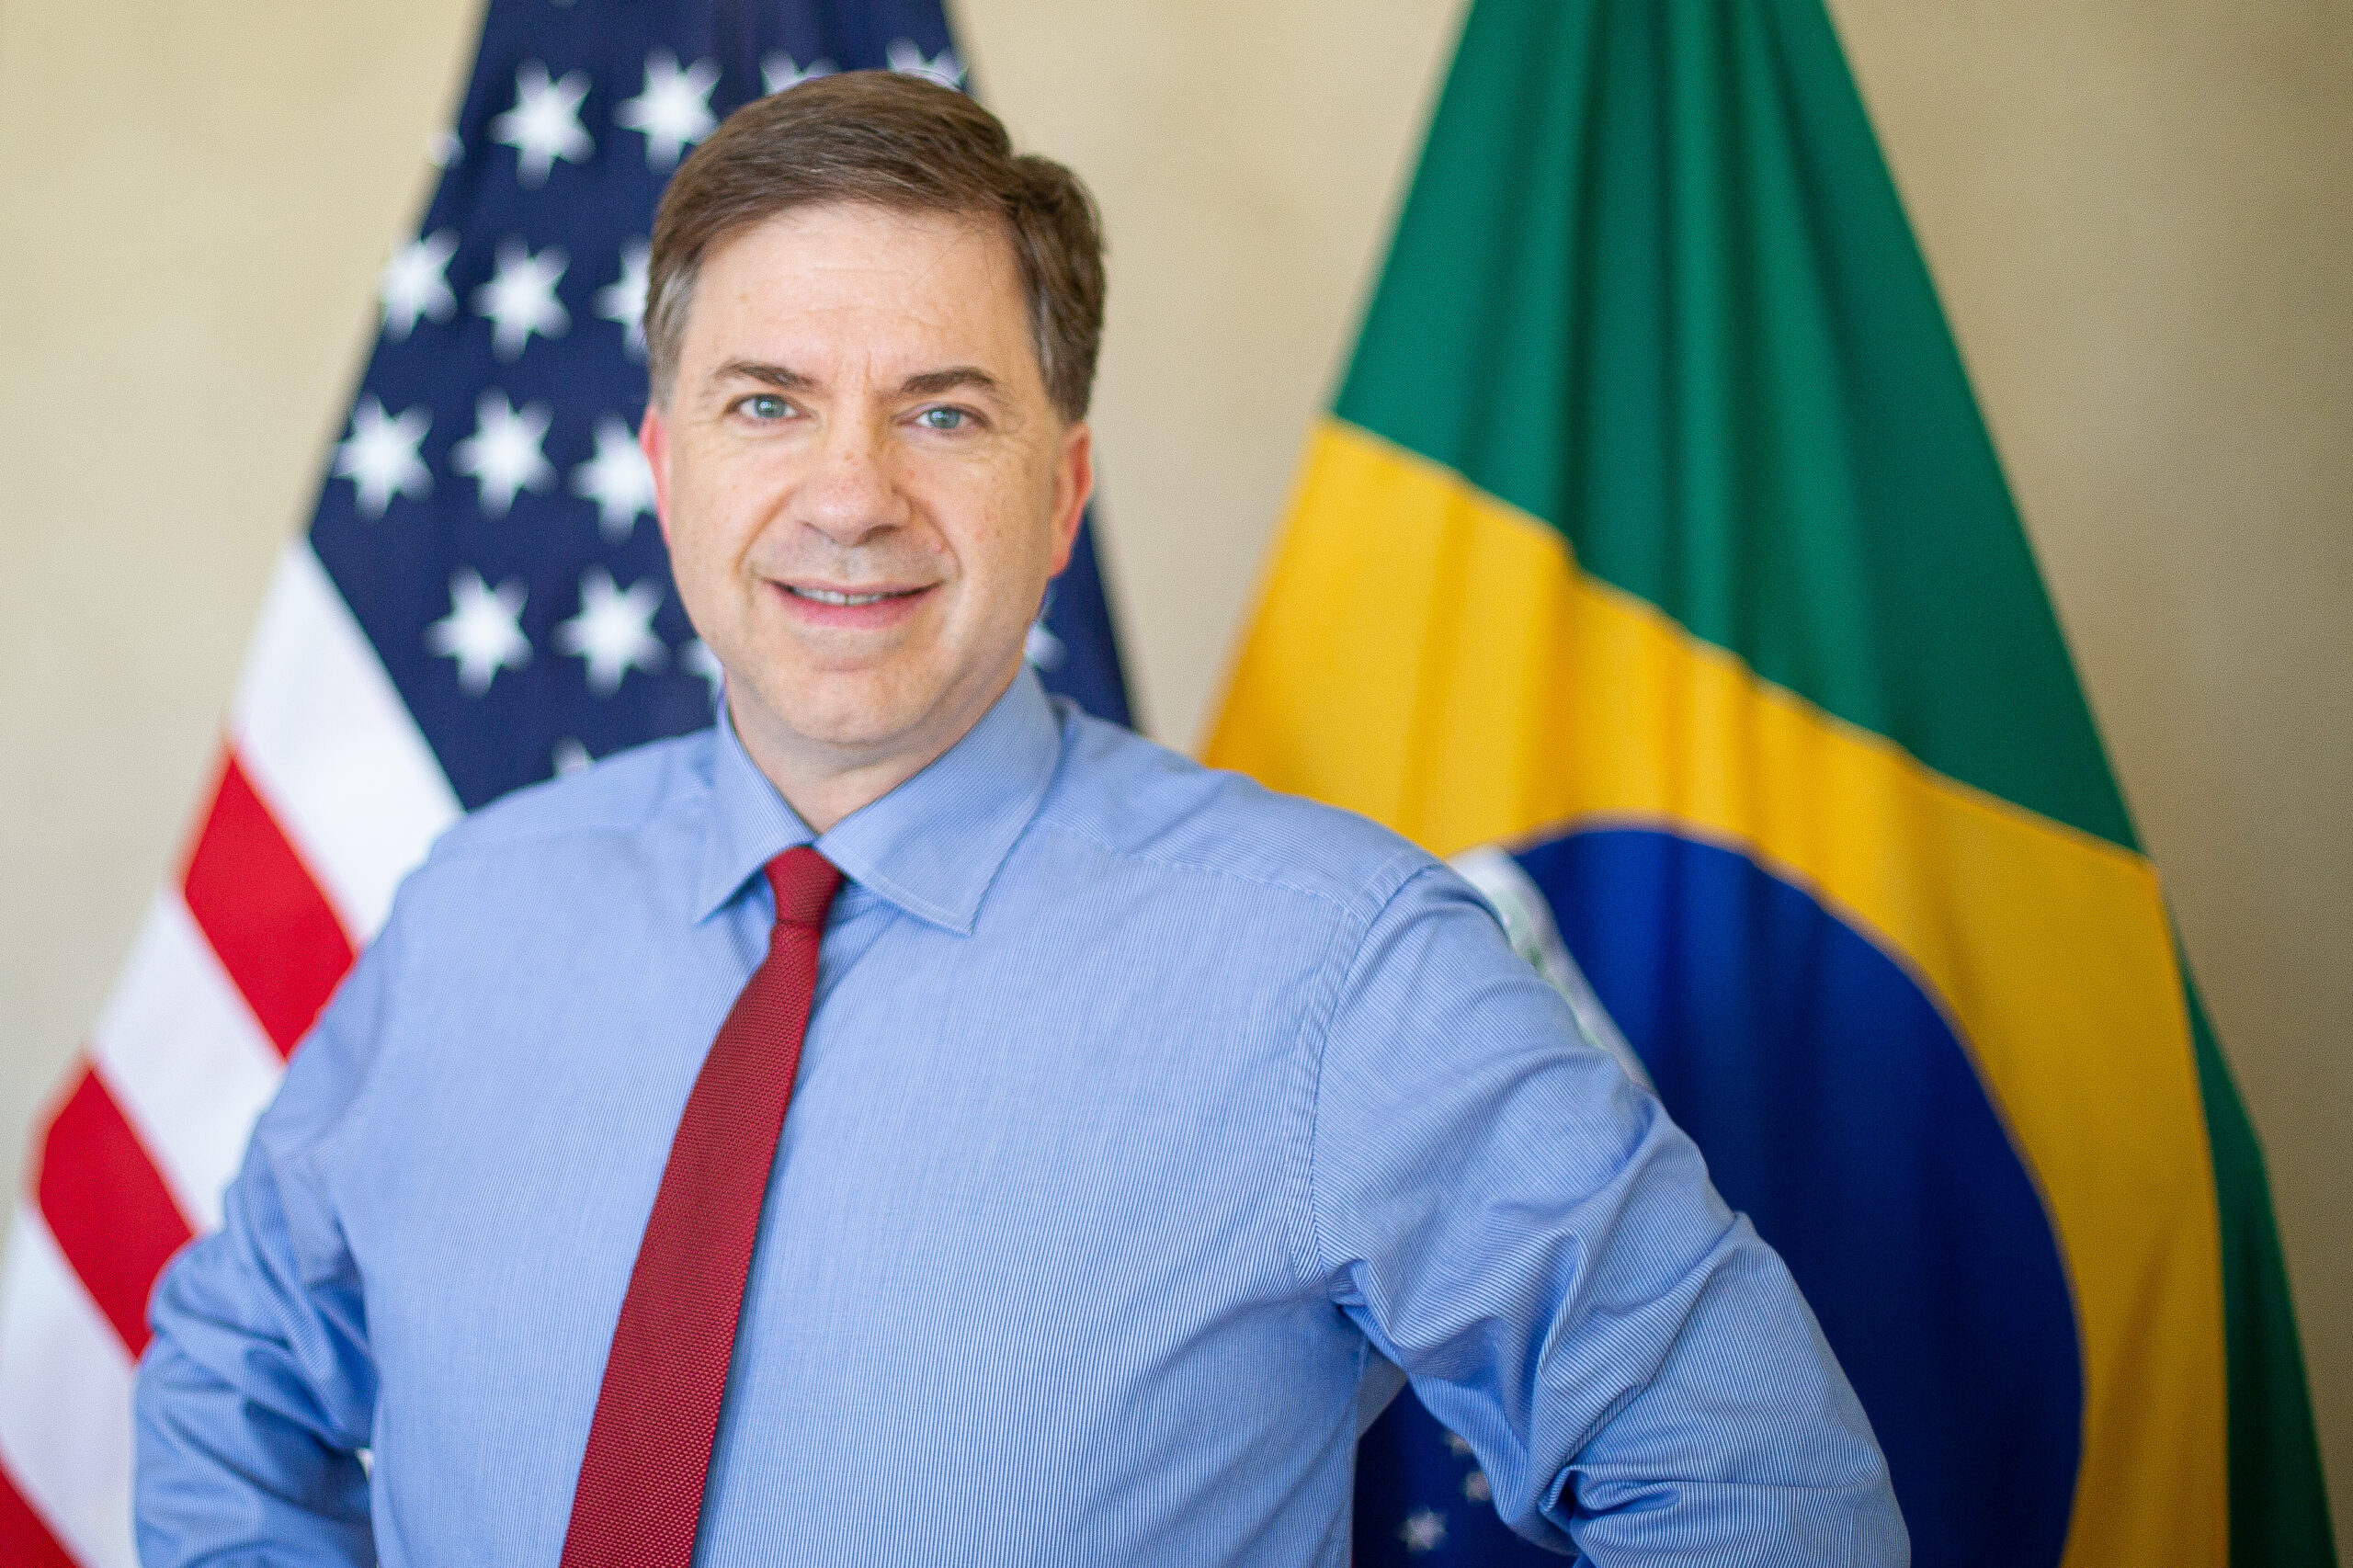 The U.S. Ambassador to Brazil, Todd Chapman